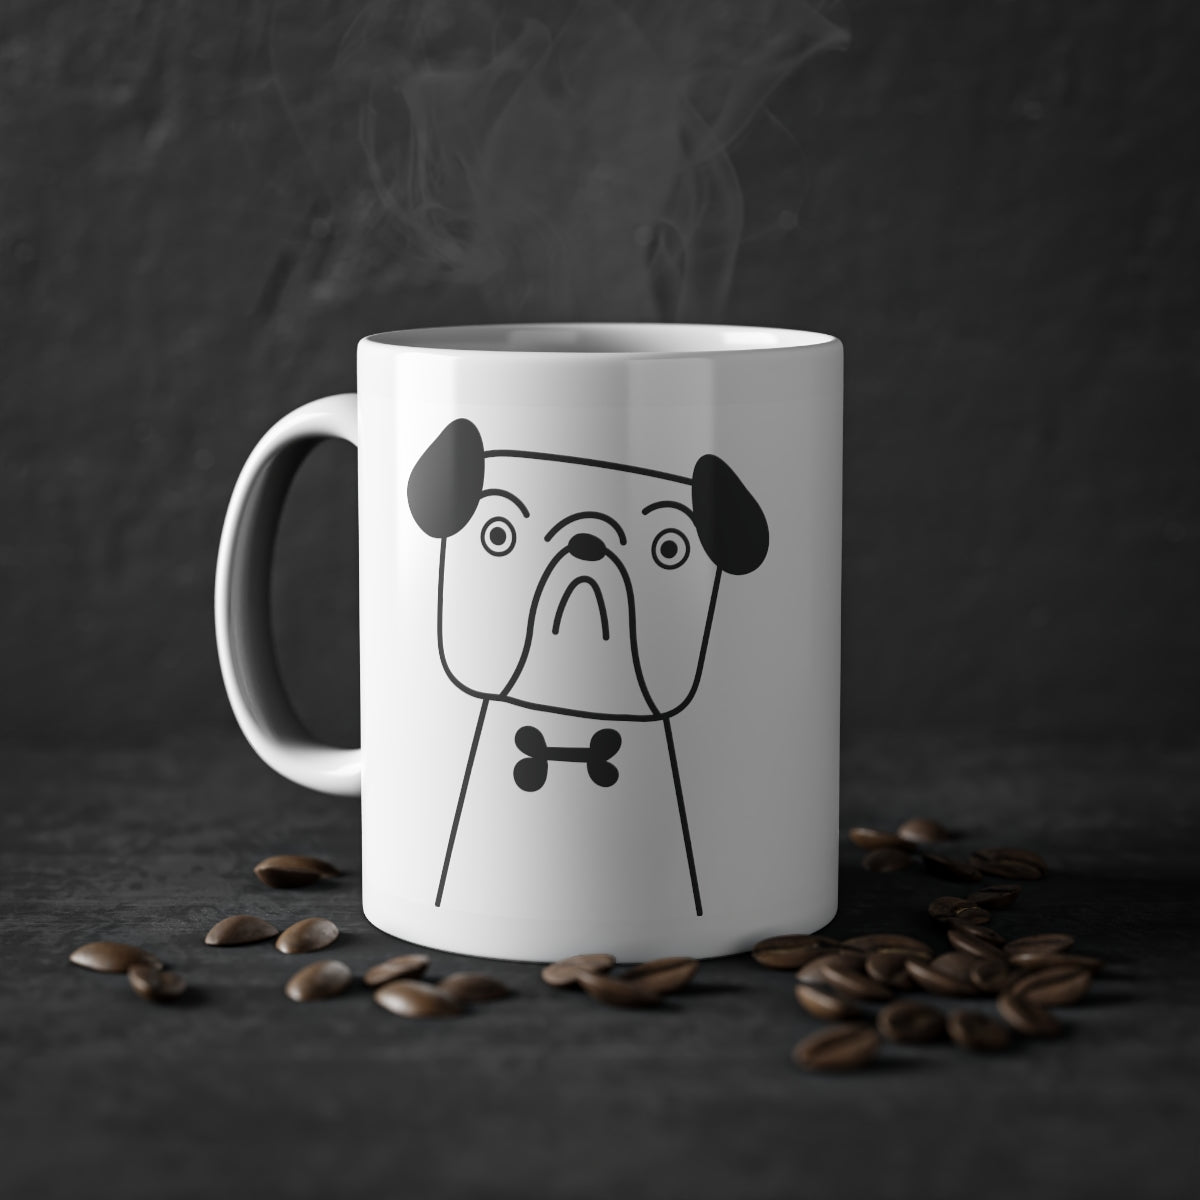 Cute dog Bulldog mug, white, 325 ml / 11 oz Coffee mug, tea mug for kids, children, puppies mug for dog lovers, dog owners